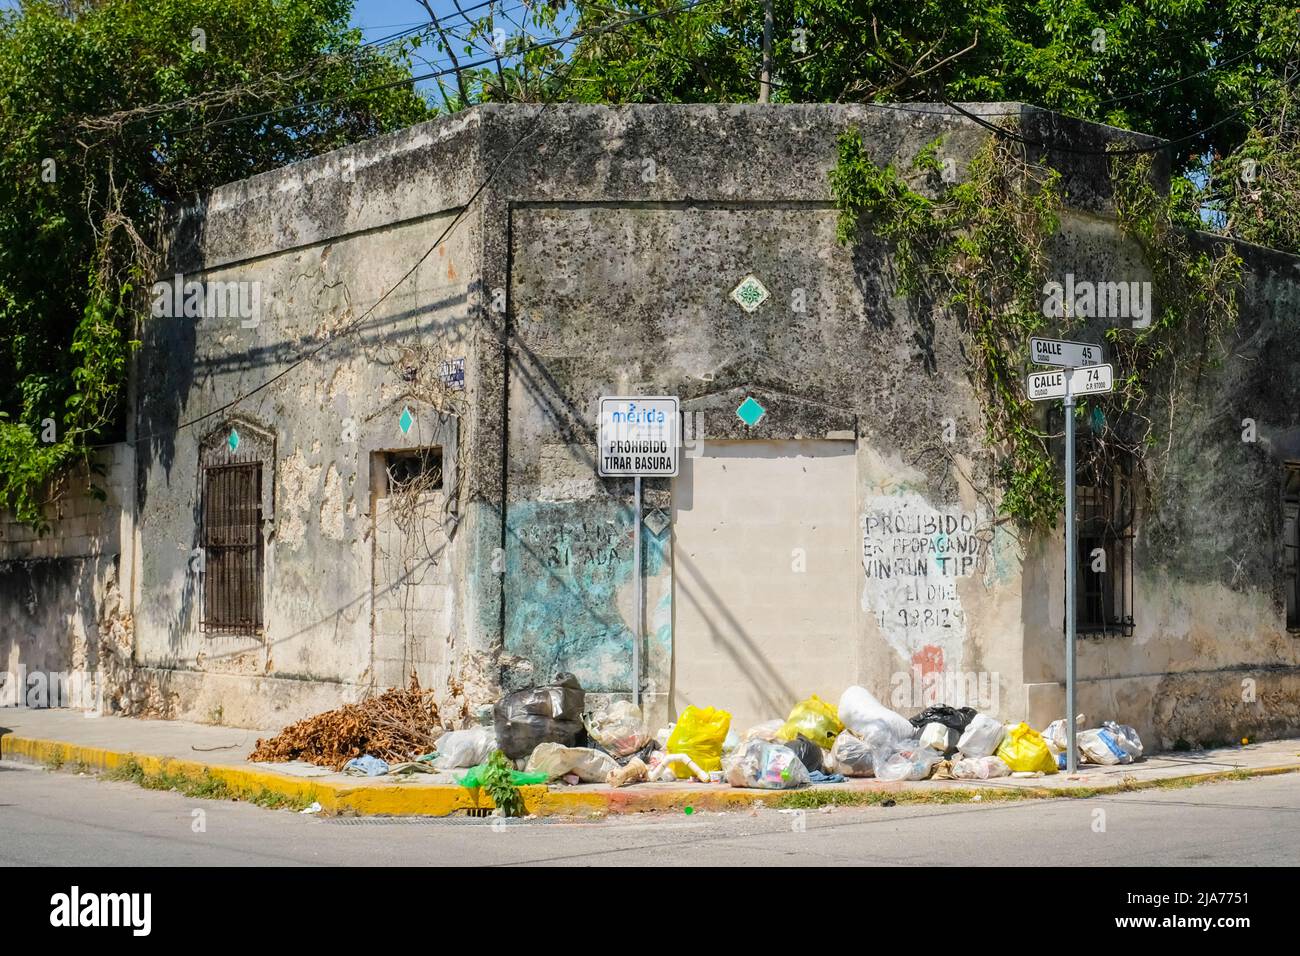 Garbage dump on a street corner, Merida Mexico Stock Photo